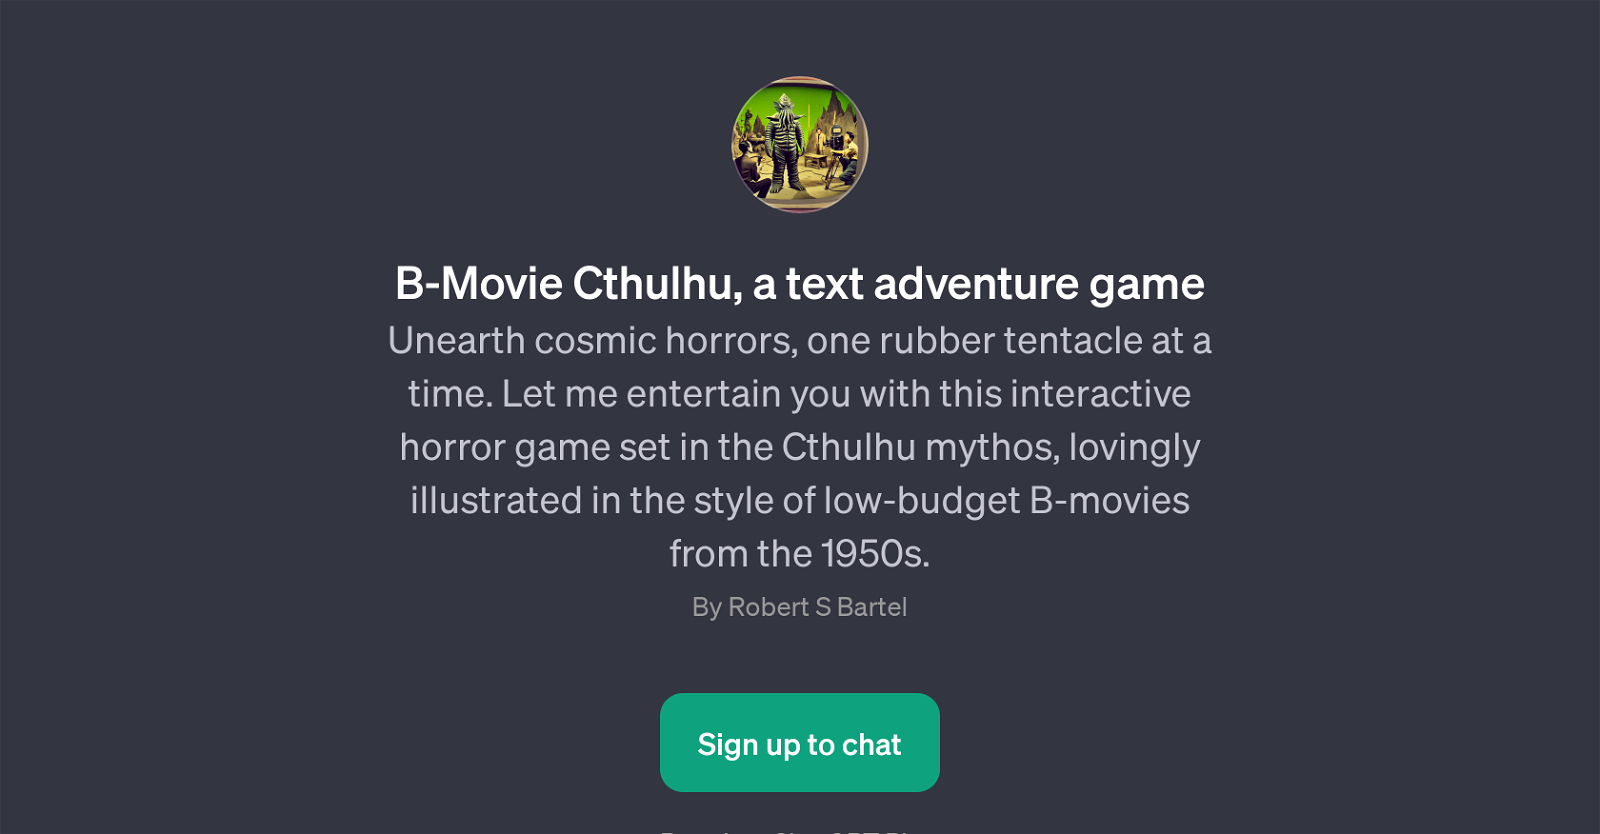 B-Movie Cthulhu website